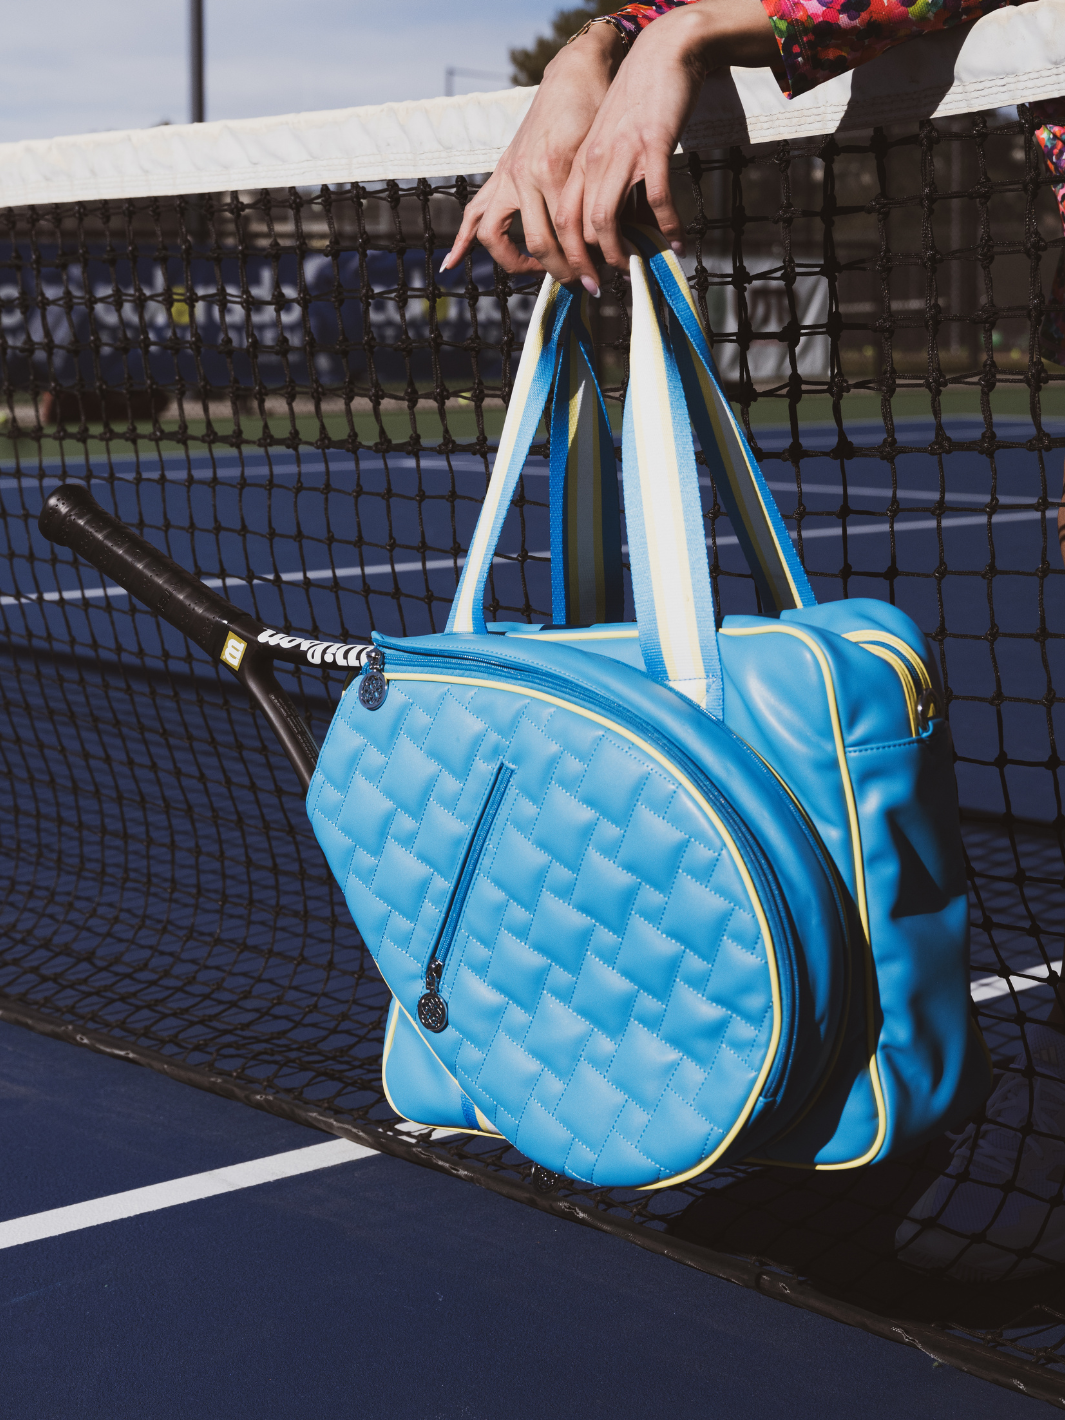 The Chris Tennis Bag